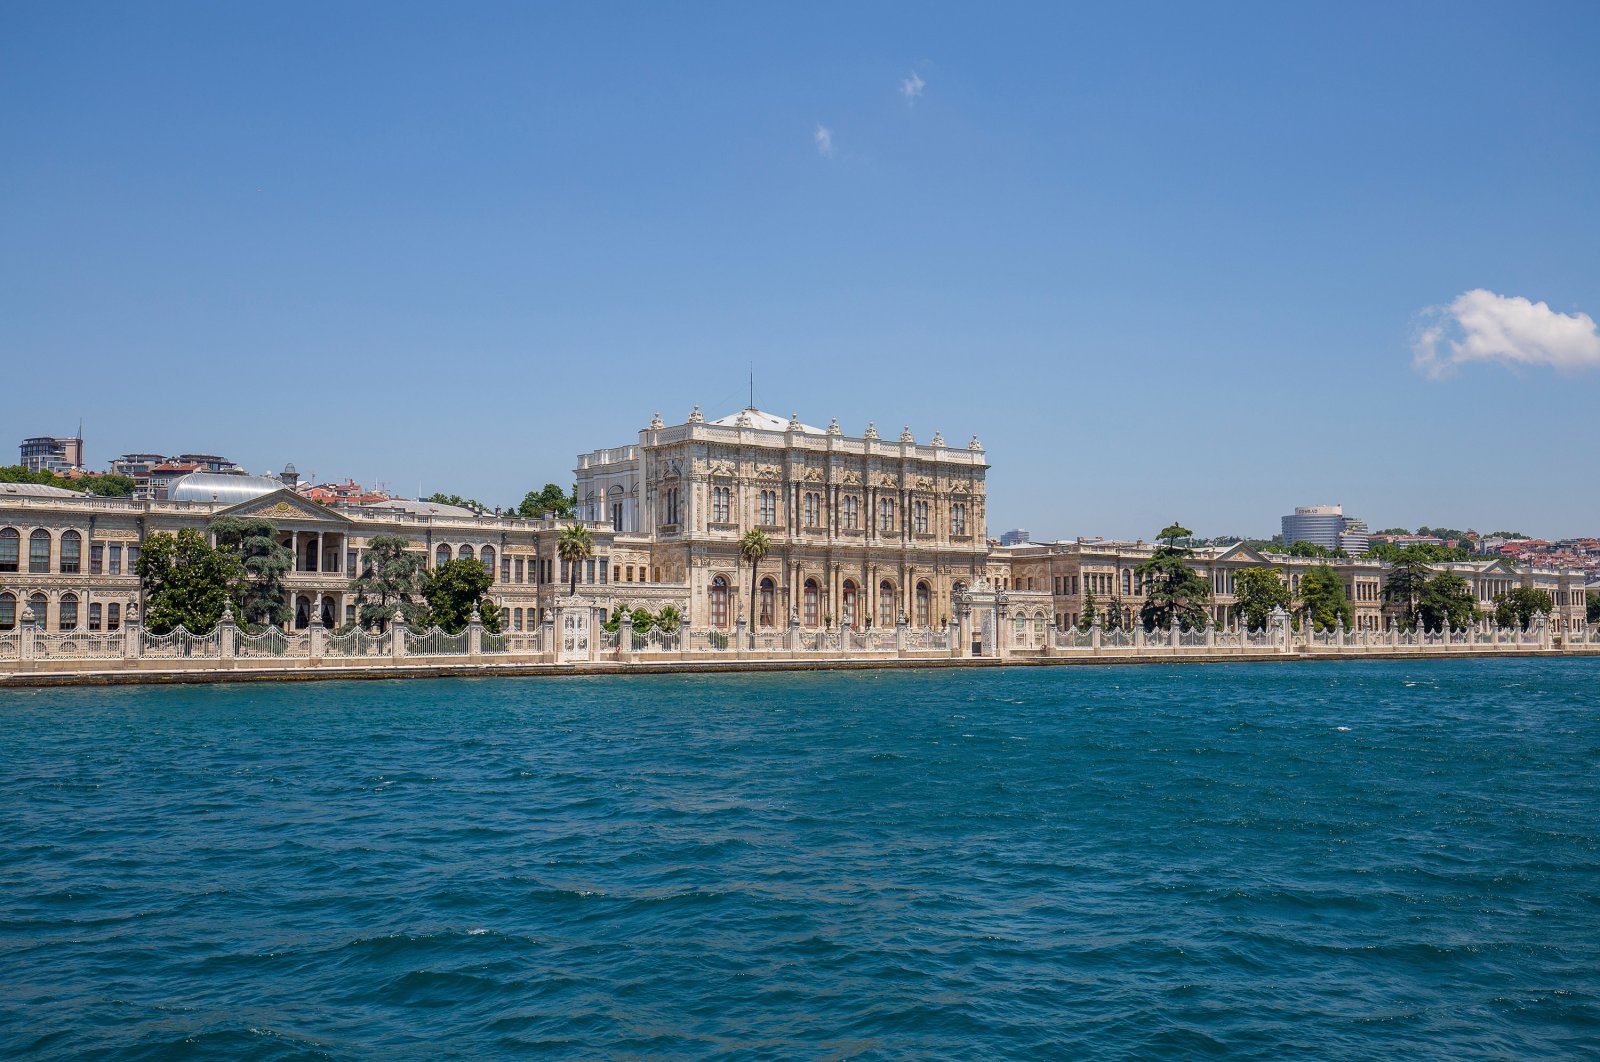 Çırağan Palace Kempinski seen along the Bosporus, Beşiktaş, Istanbul, Turkey, July 7, 2015. (Shutterstock Photo)